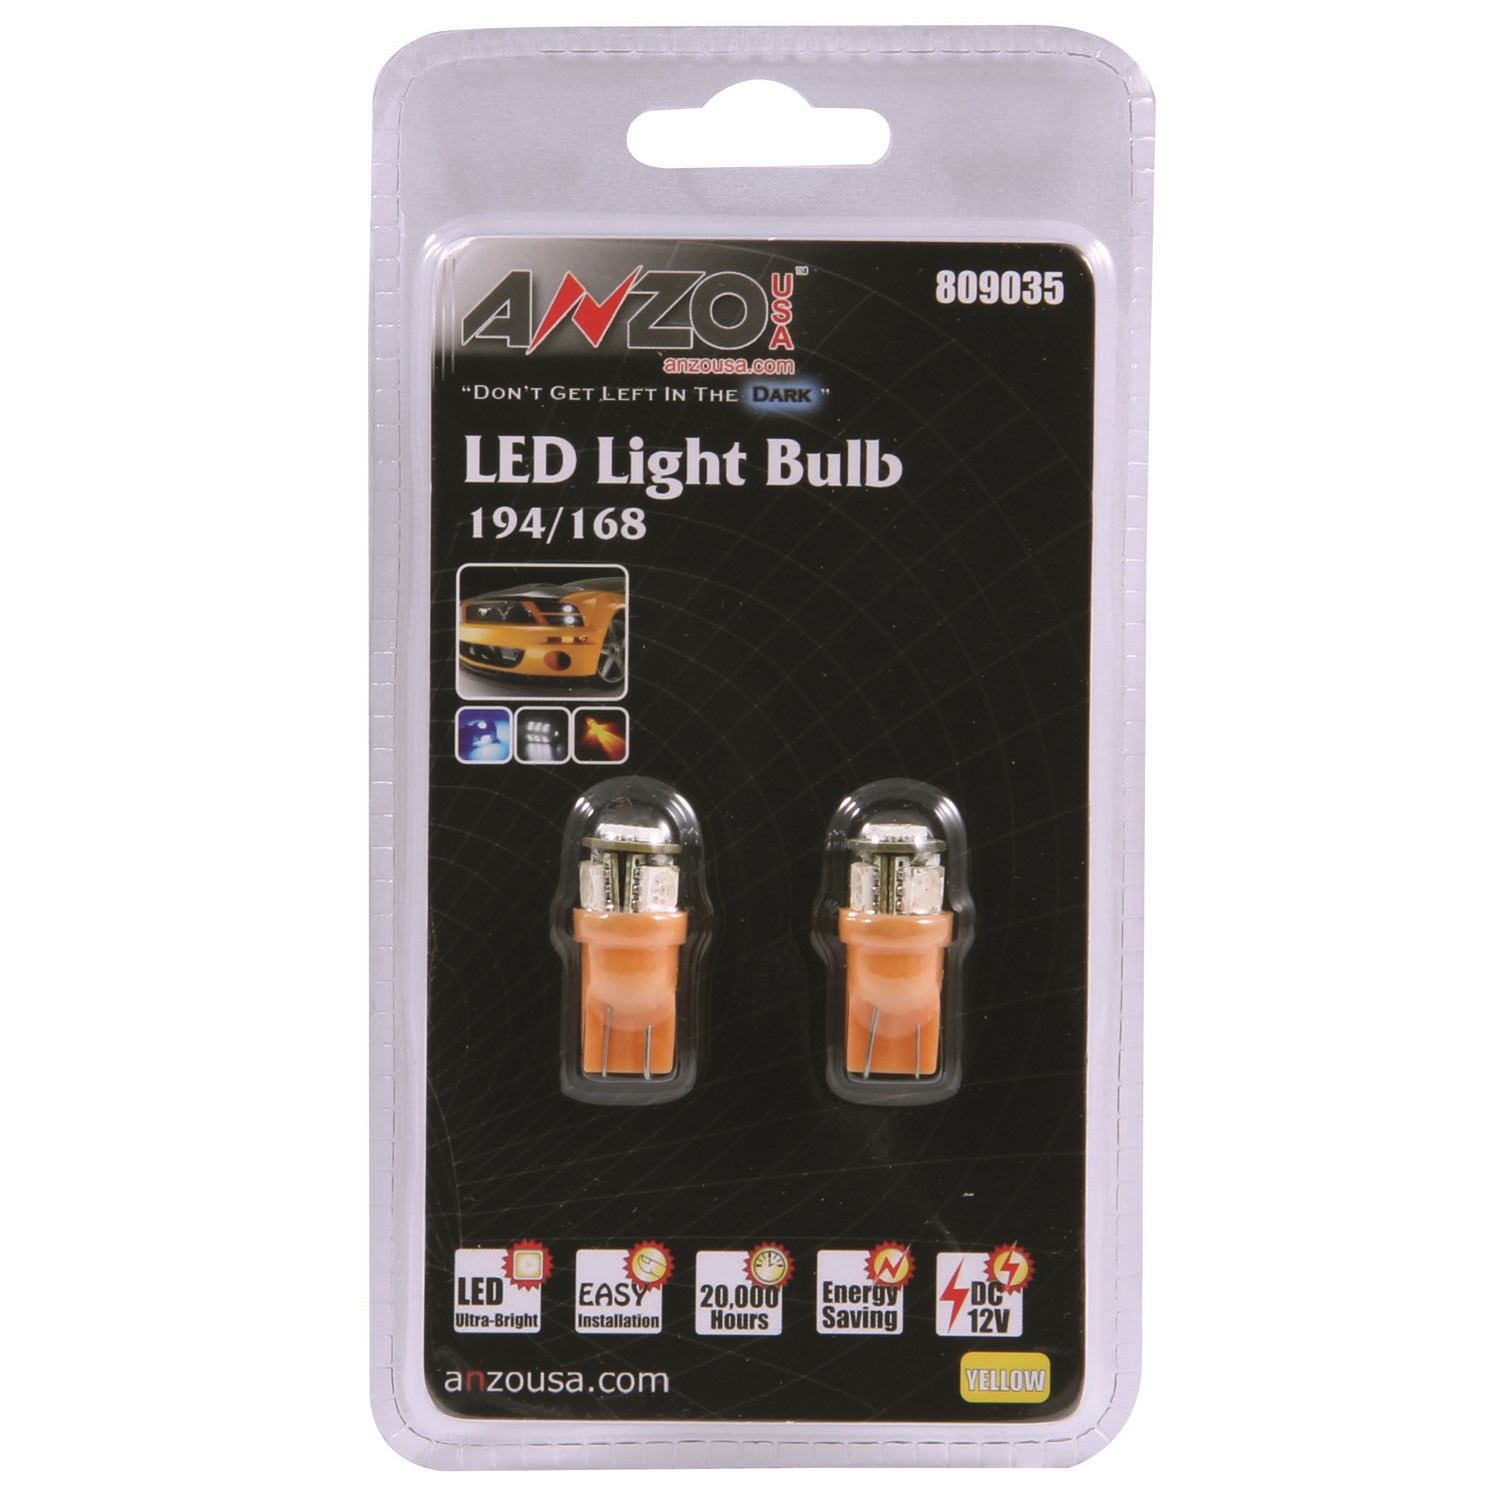 Anzo USA Anzo USA 809035 LED Replacement Bulb